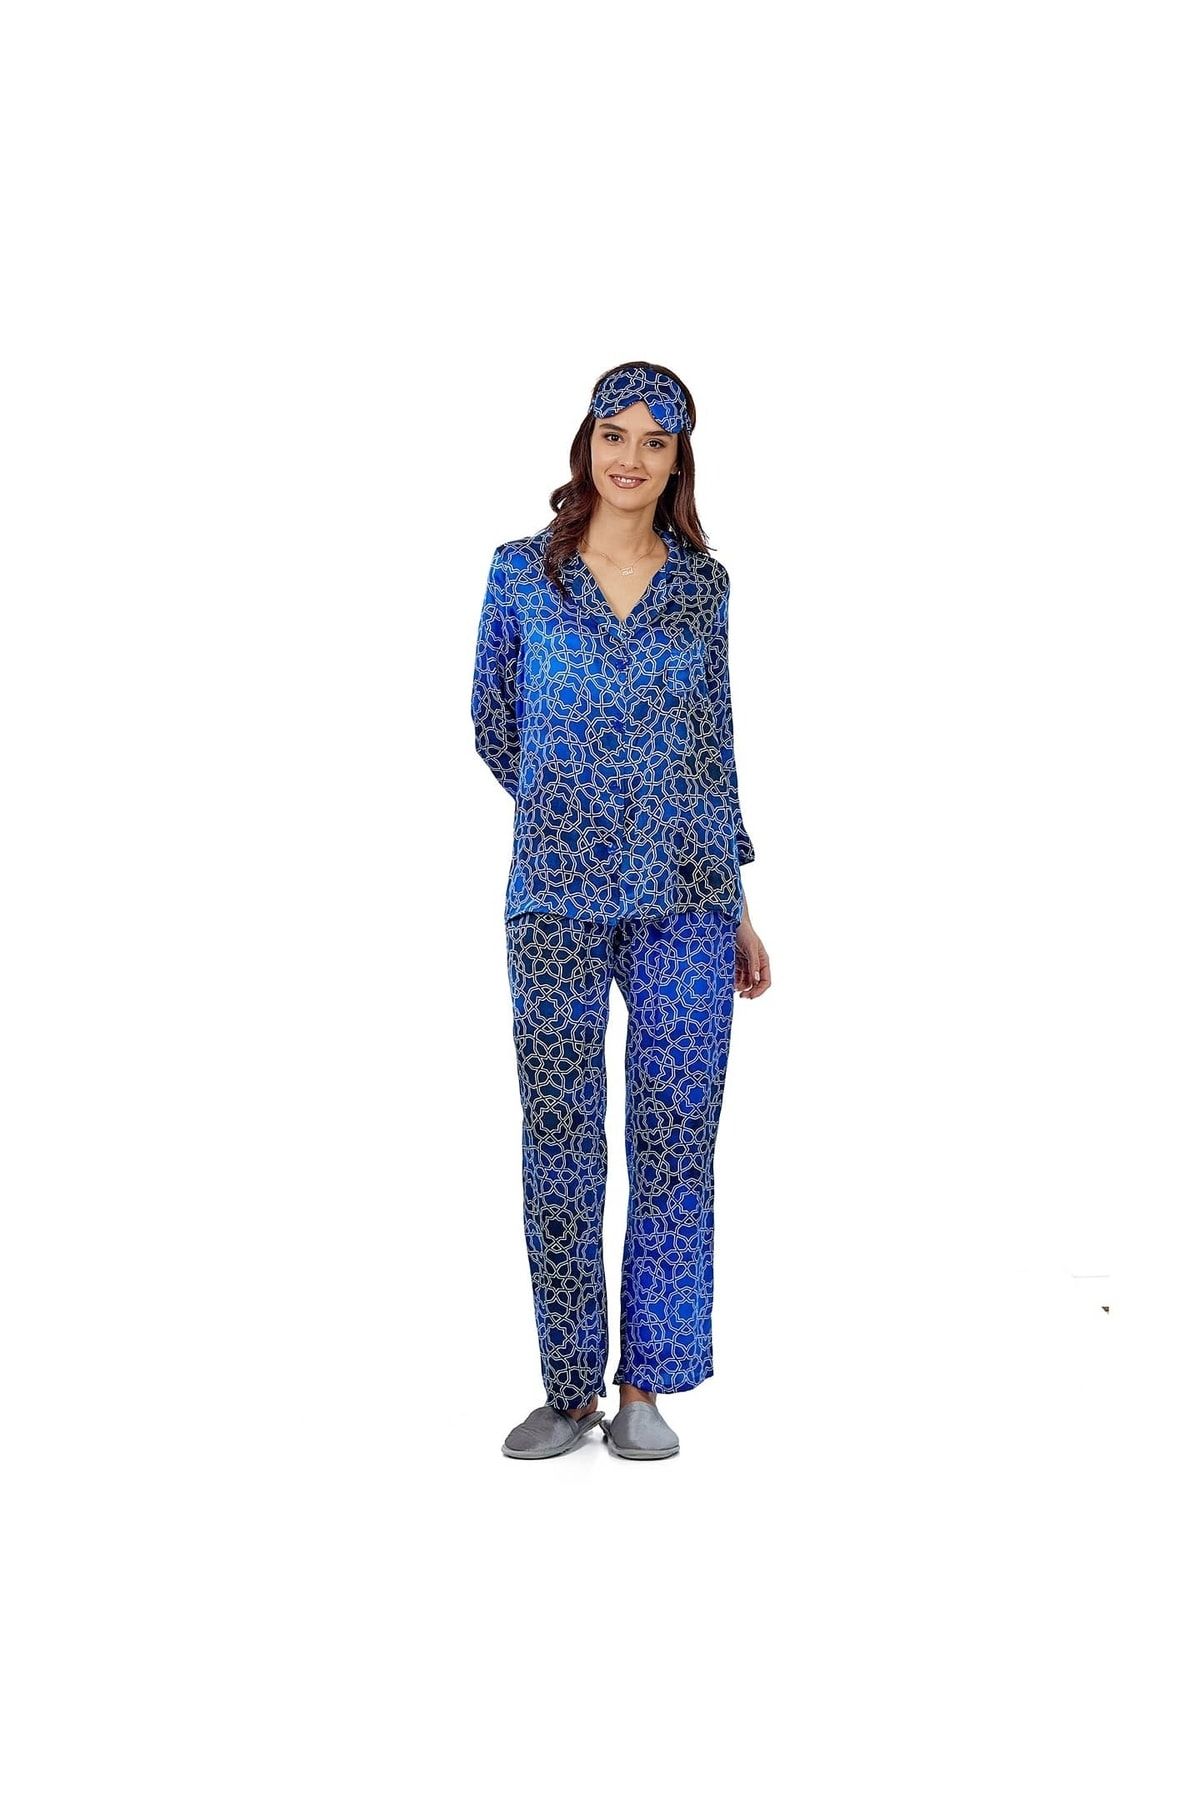 Nomads Felt İpek Gömlek-Pantolon / Pijama Takımı | Mavi-Lacivert Desenli | Nomads Felt